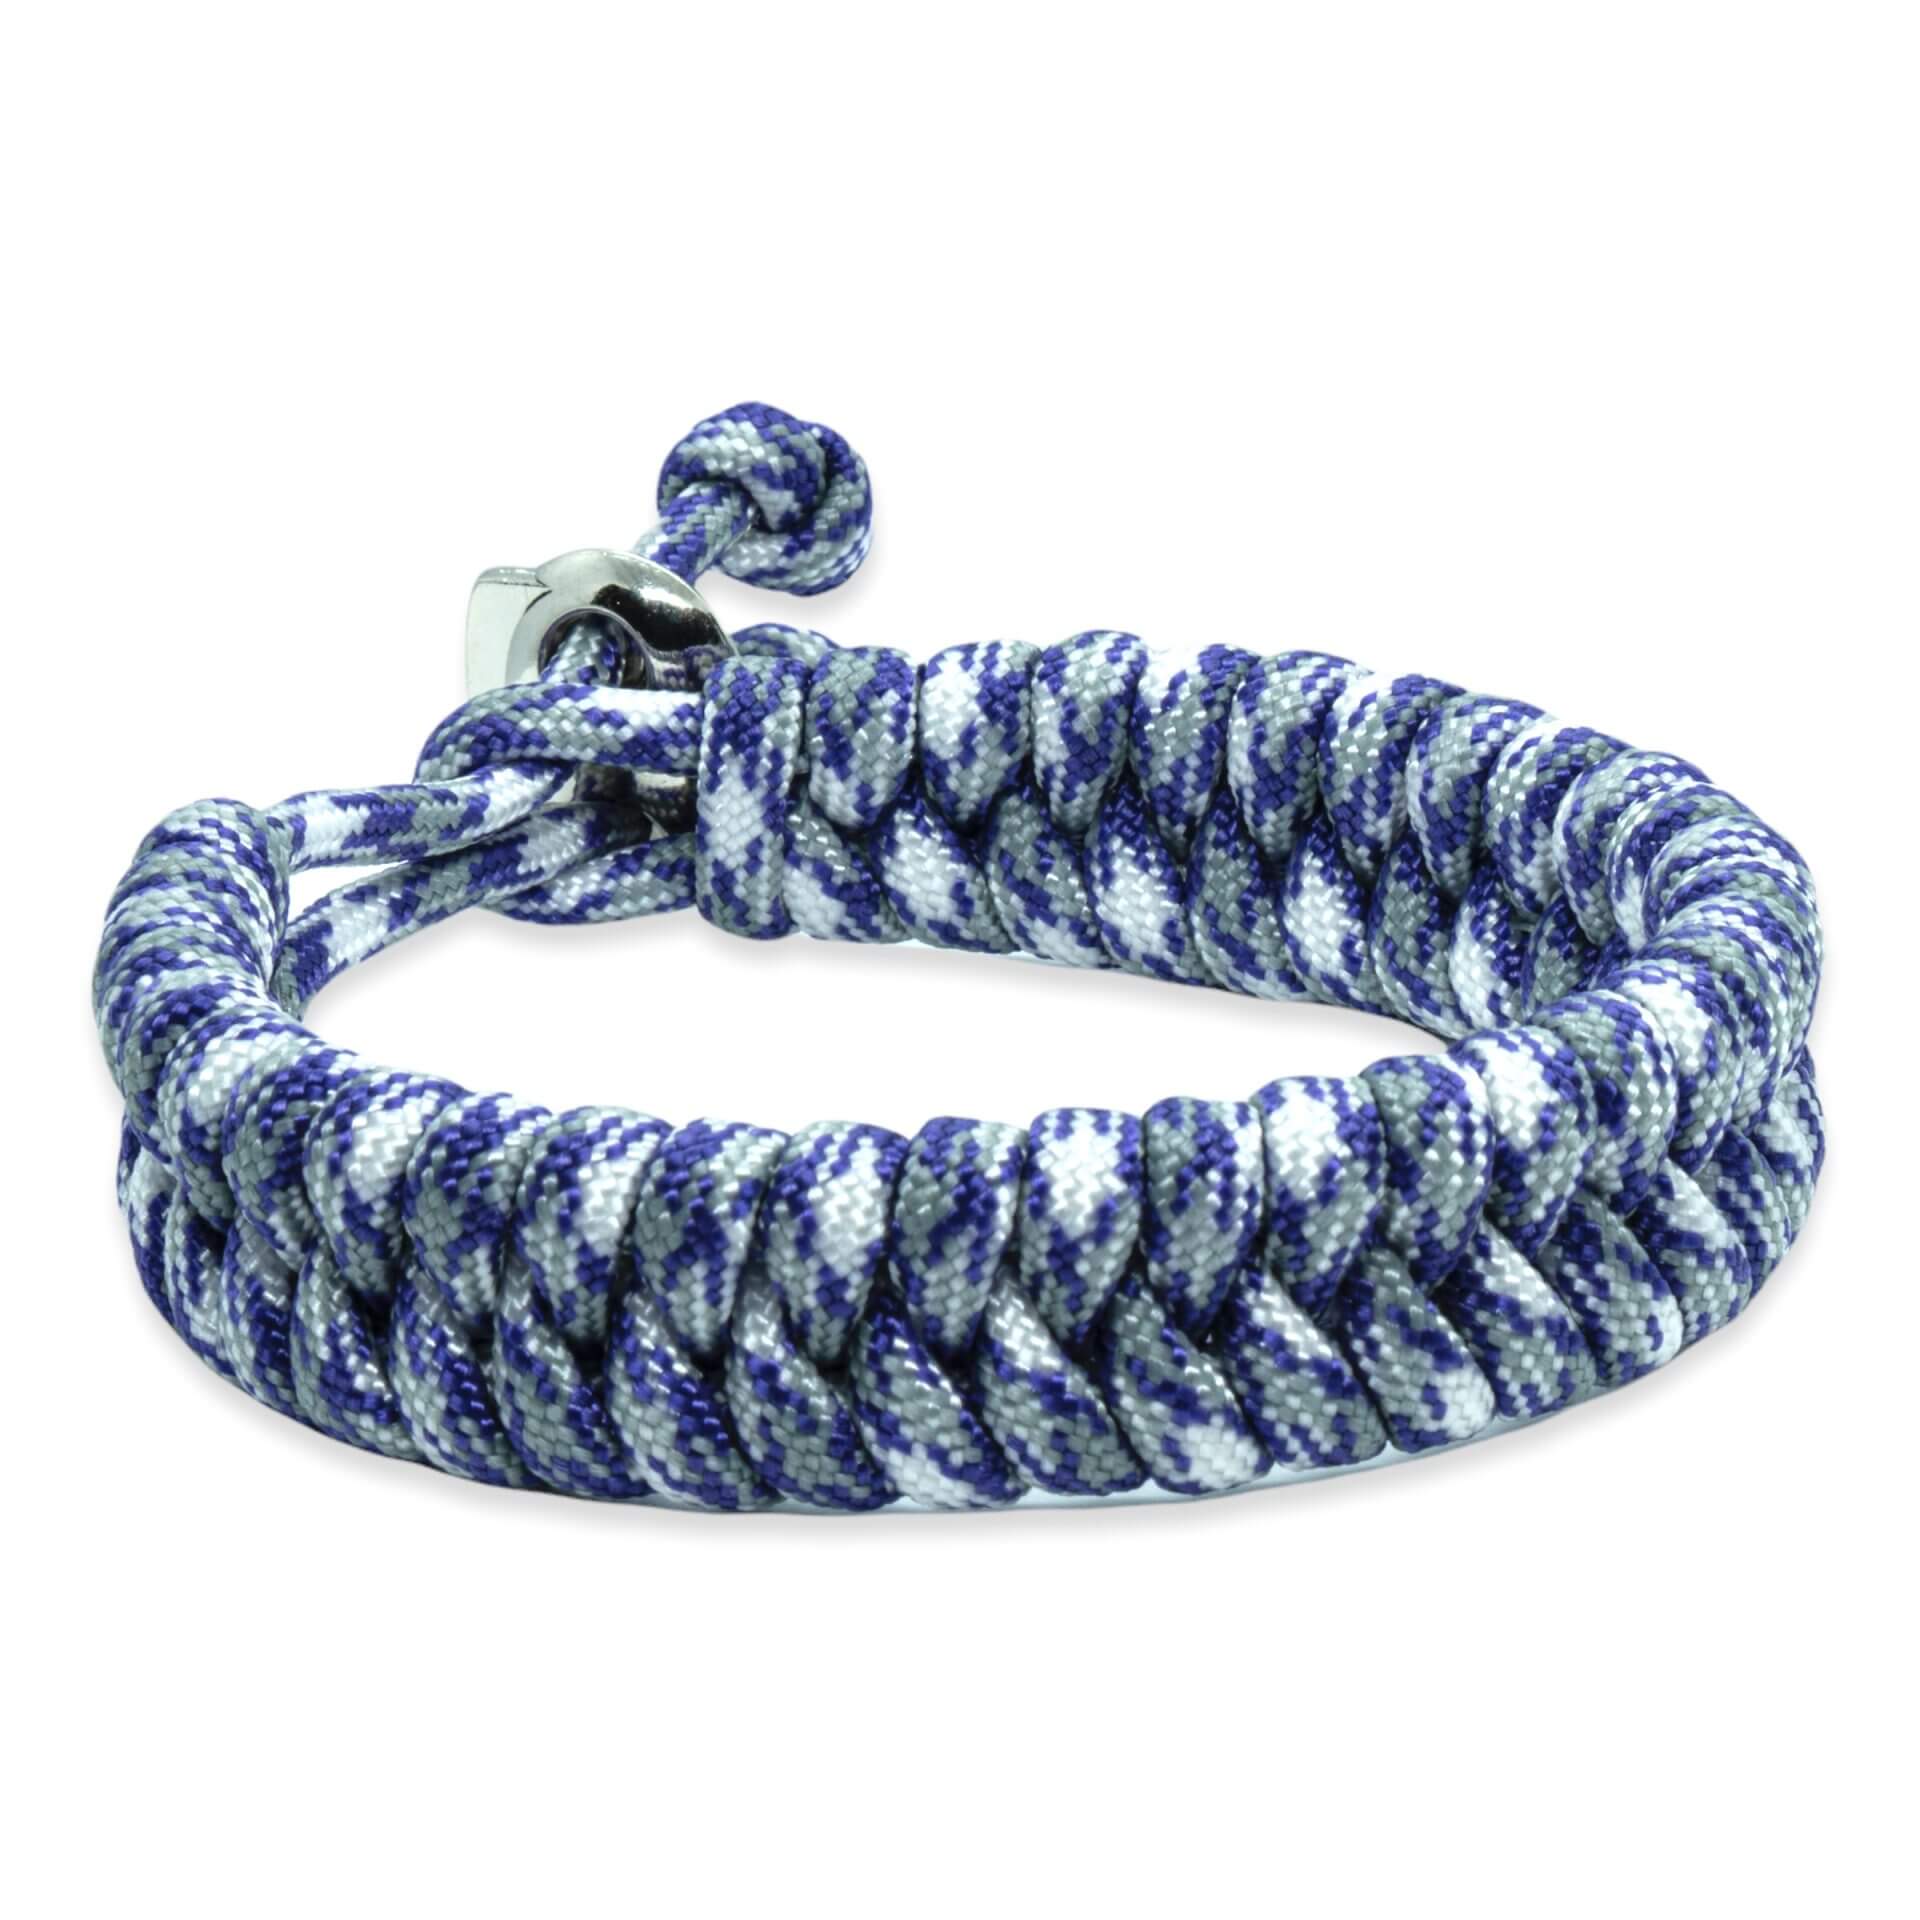 Swedish tail bracelet - Blue White Gray rope colors